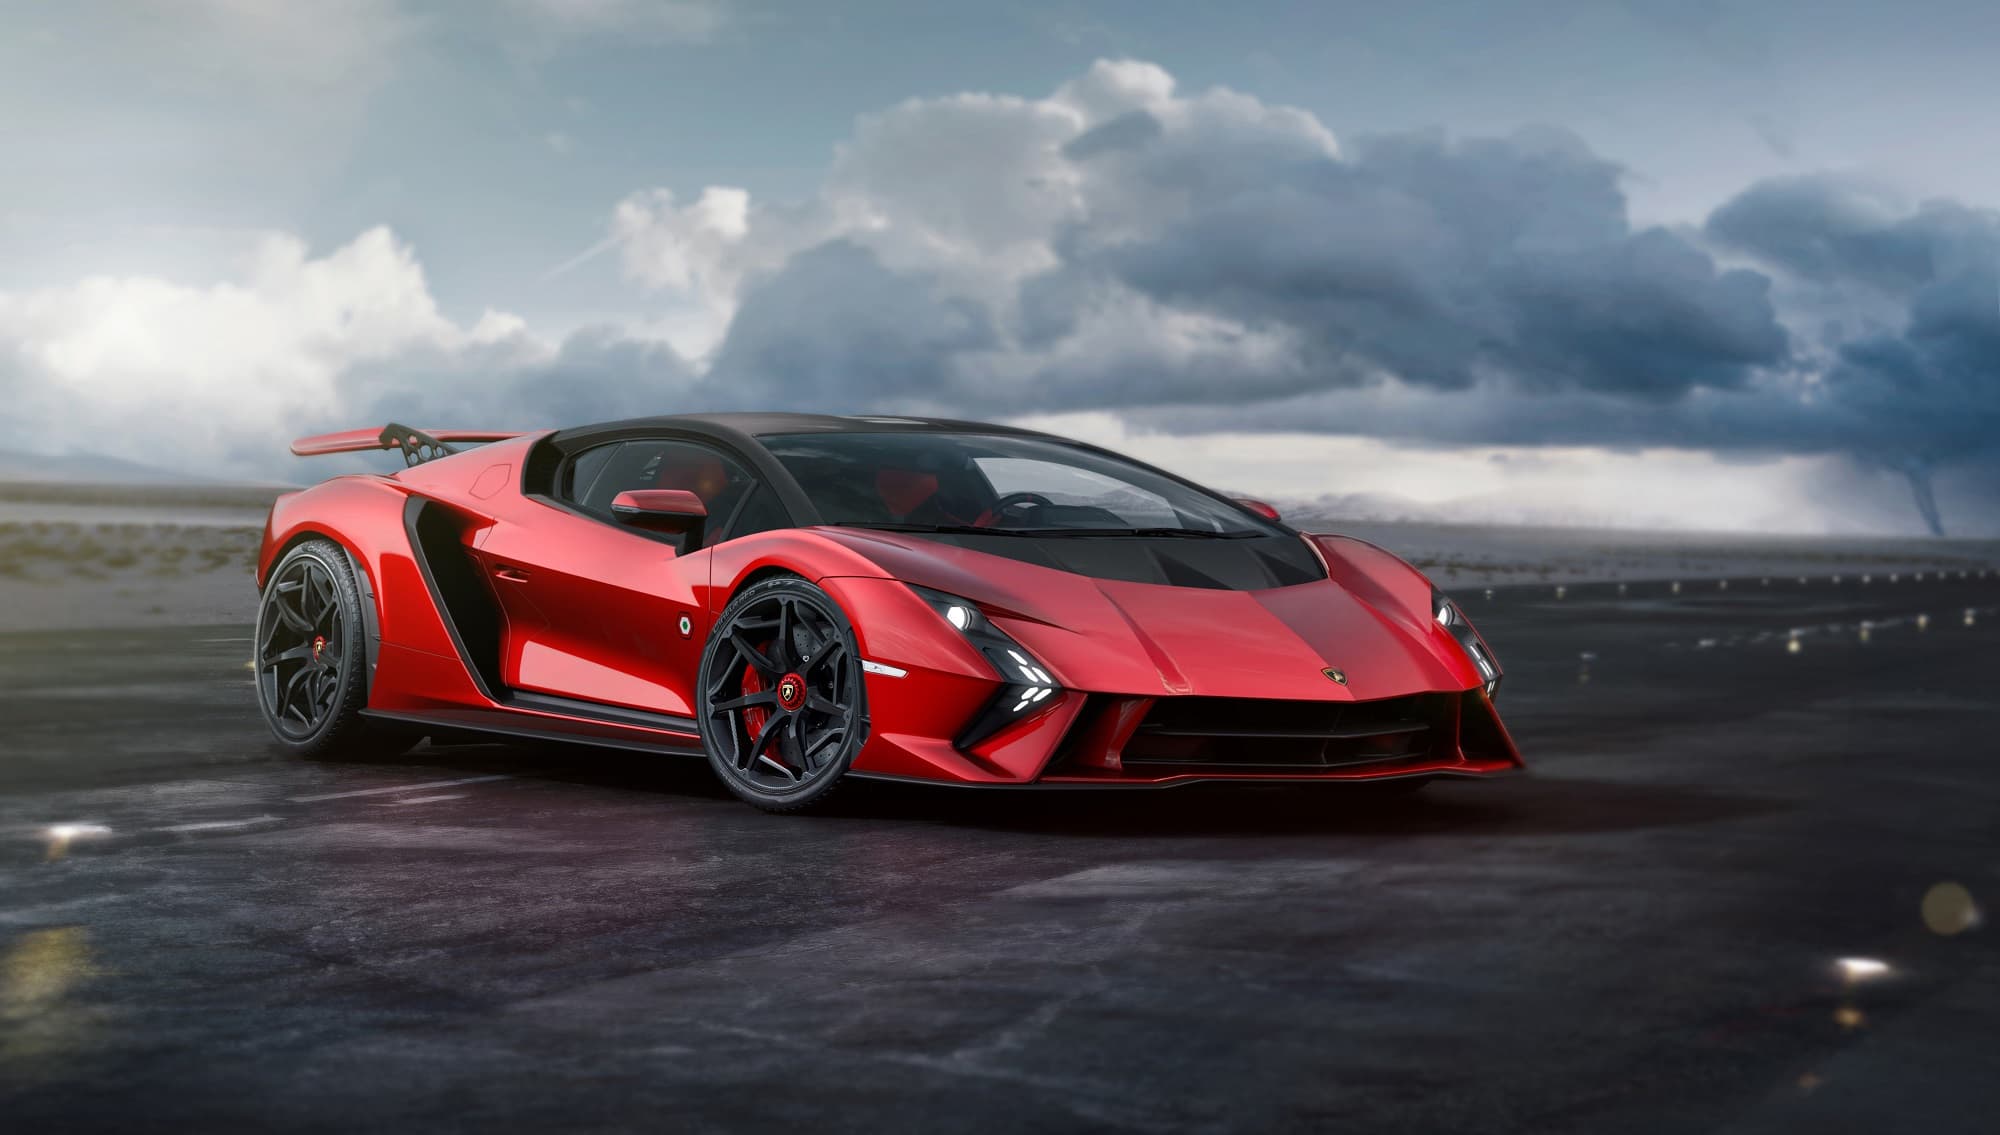 Lamborghini rouge